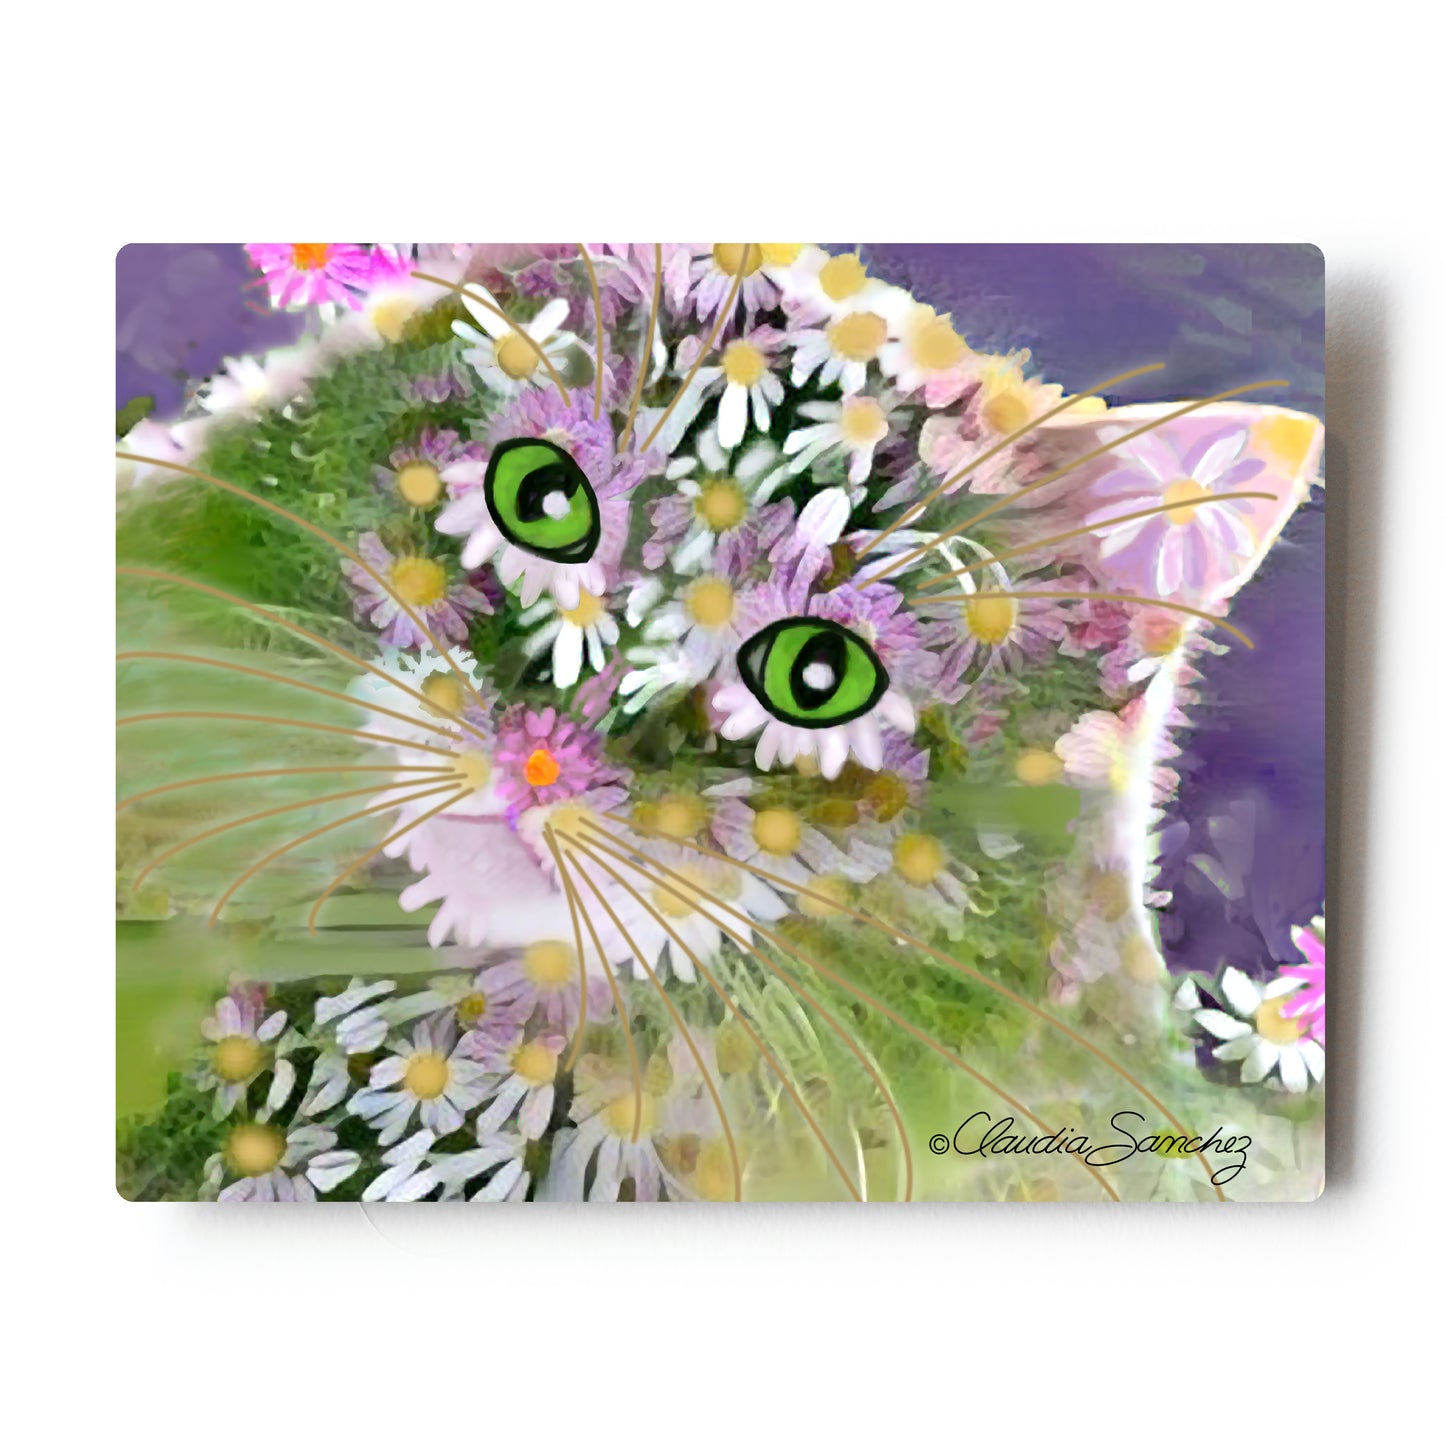 8 x 10 Aluminum Art Print features Simon in Bloom, cat art by Claudia Sanchez.